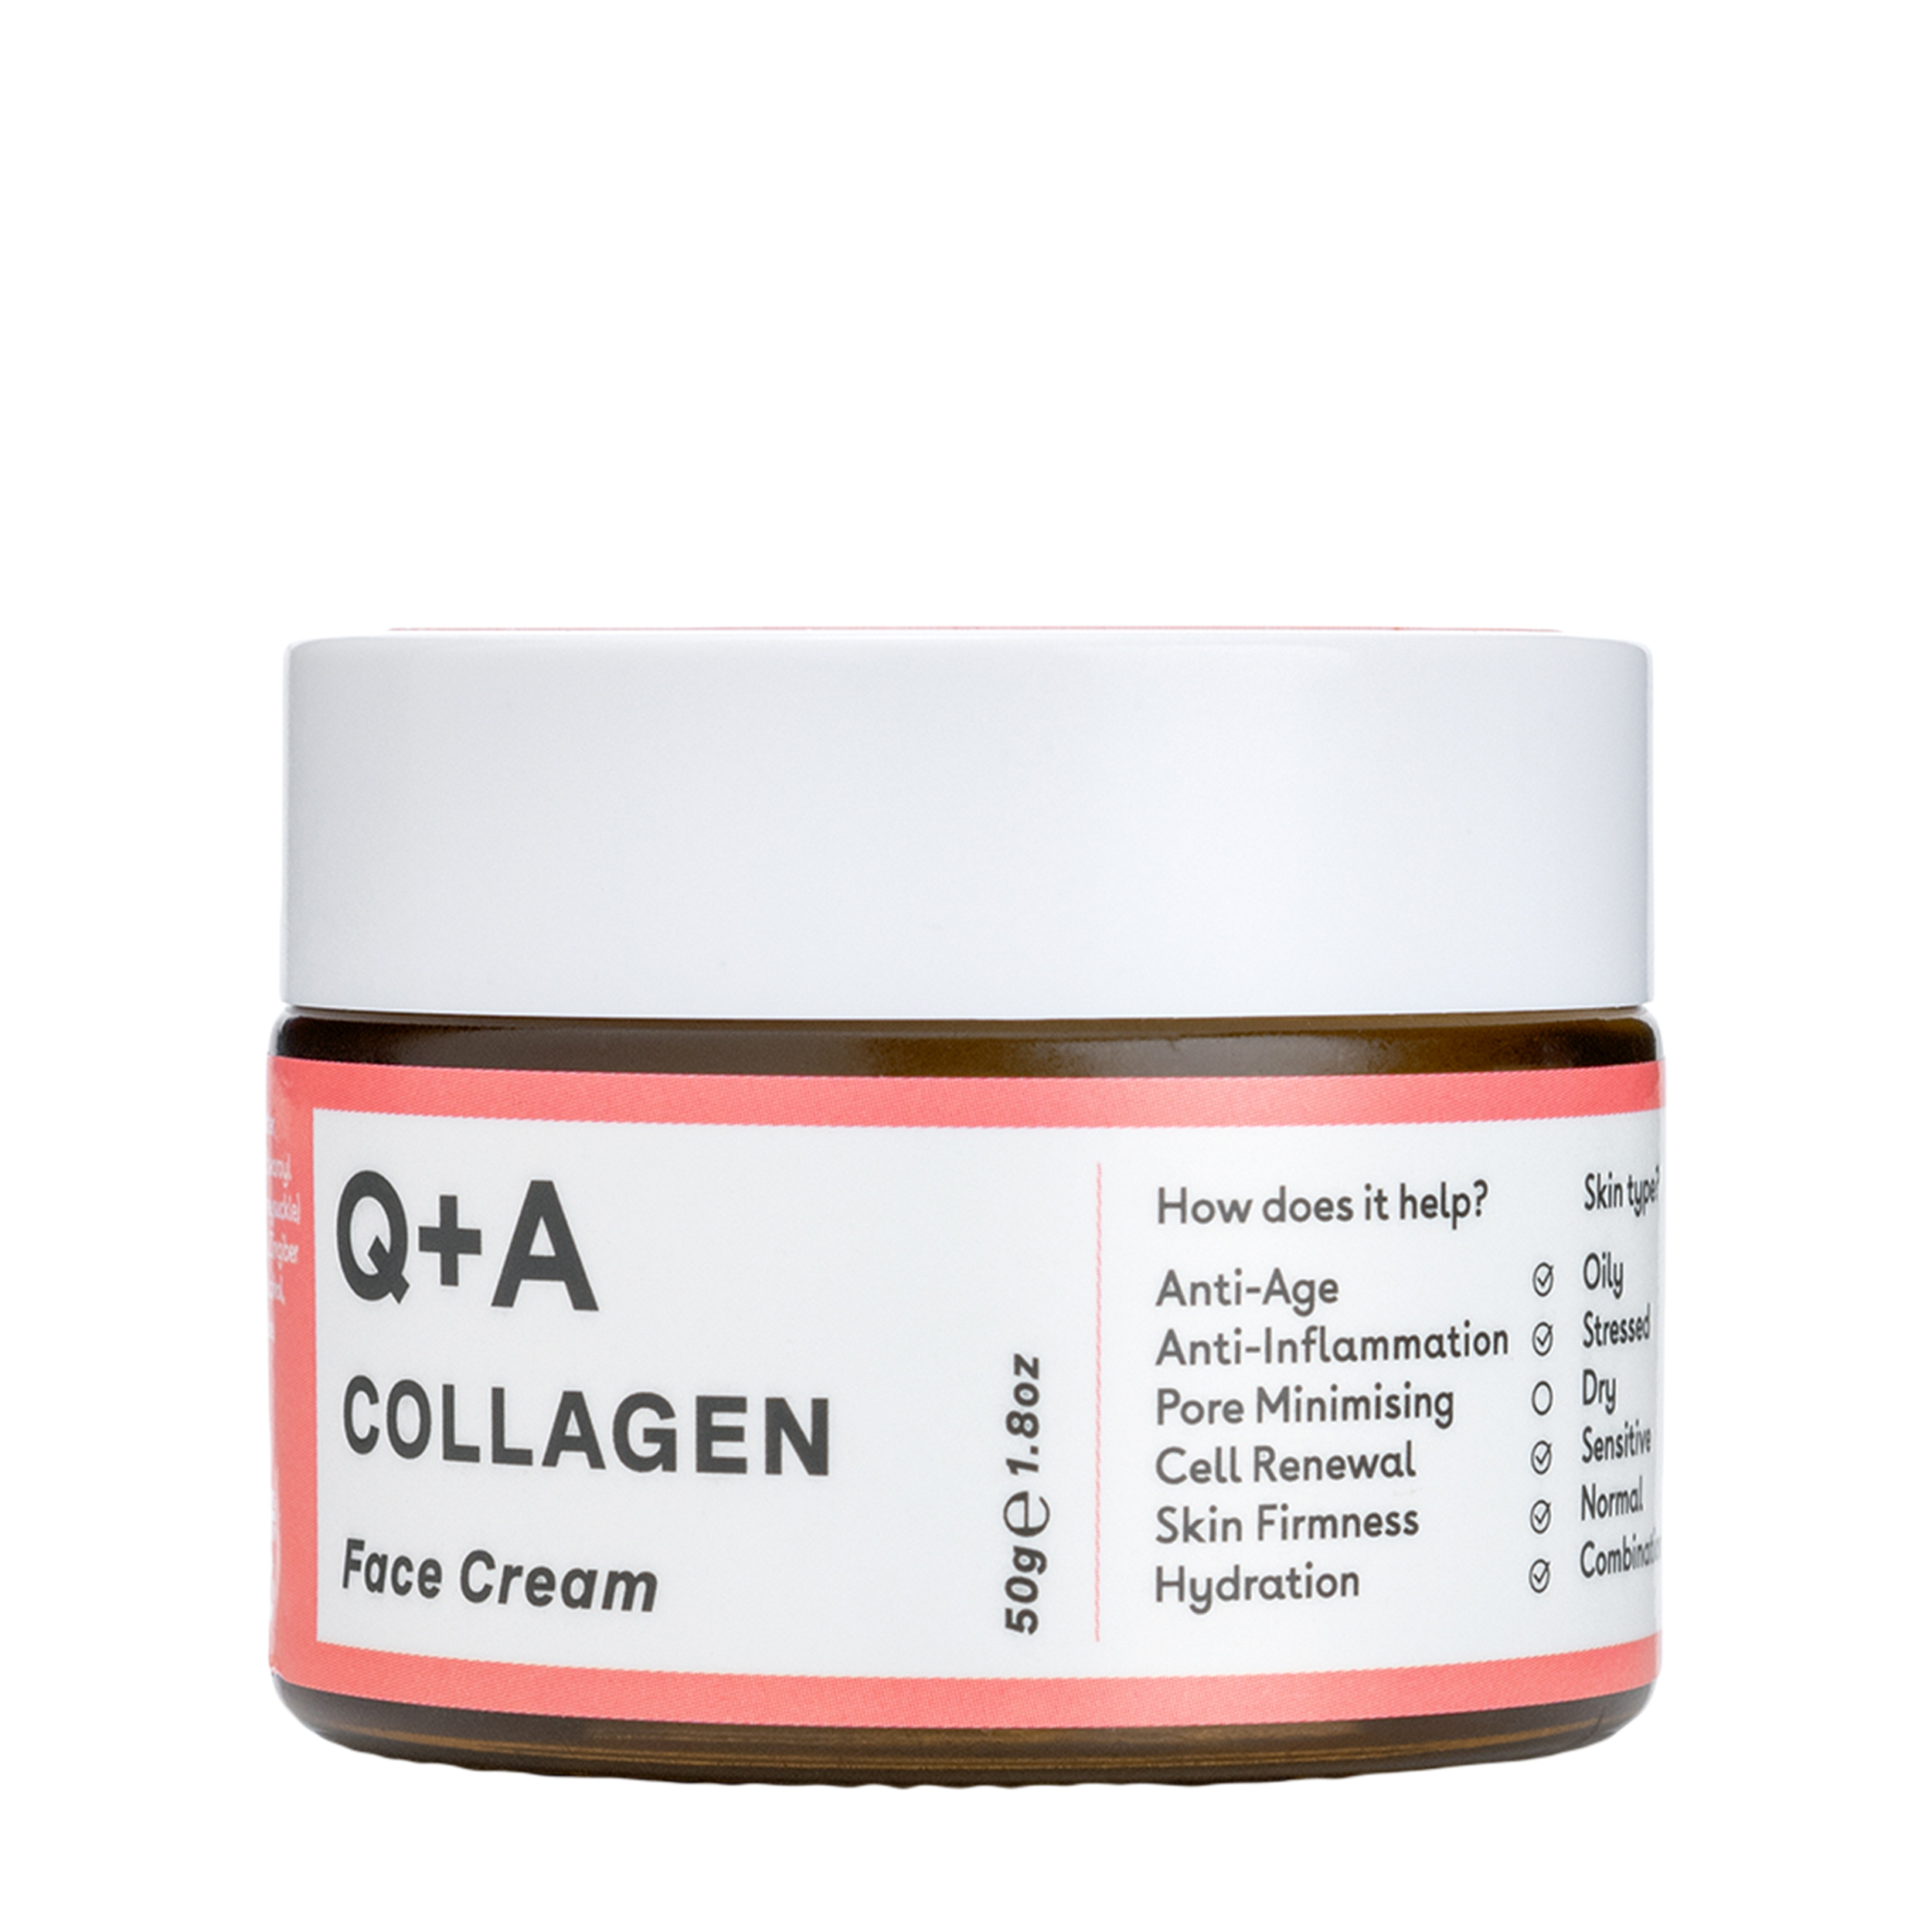 Q+A Q+A Антивозрастной крем для лица Collagen 50 гр QACOLLAGENCR - фото 1